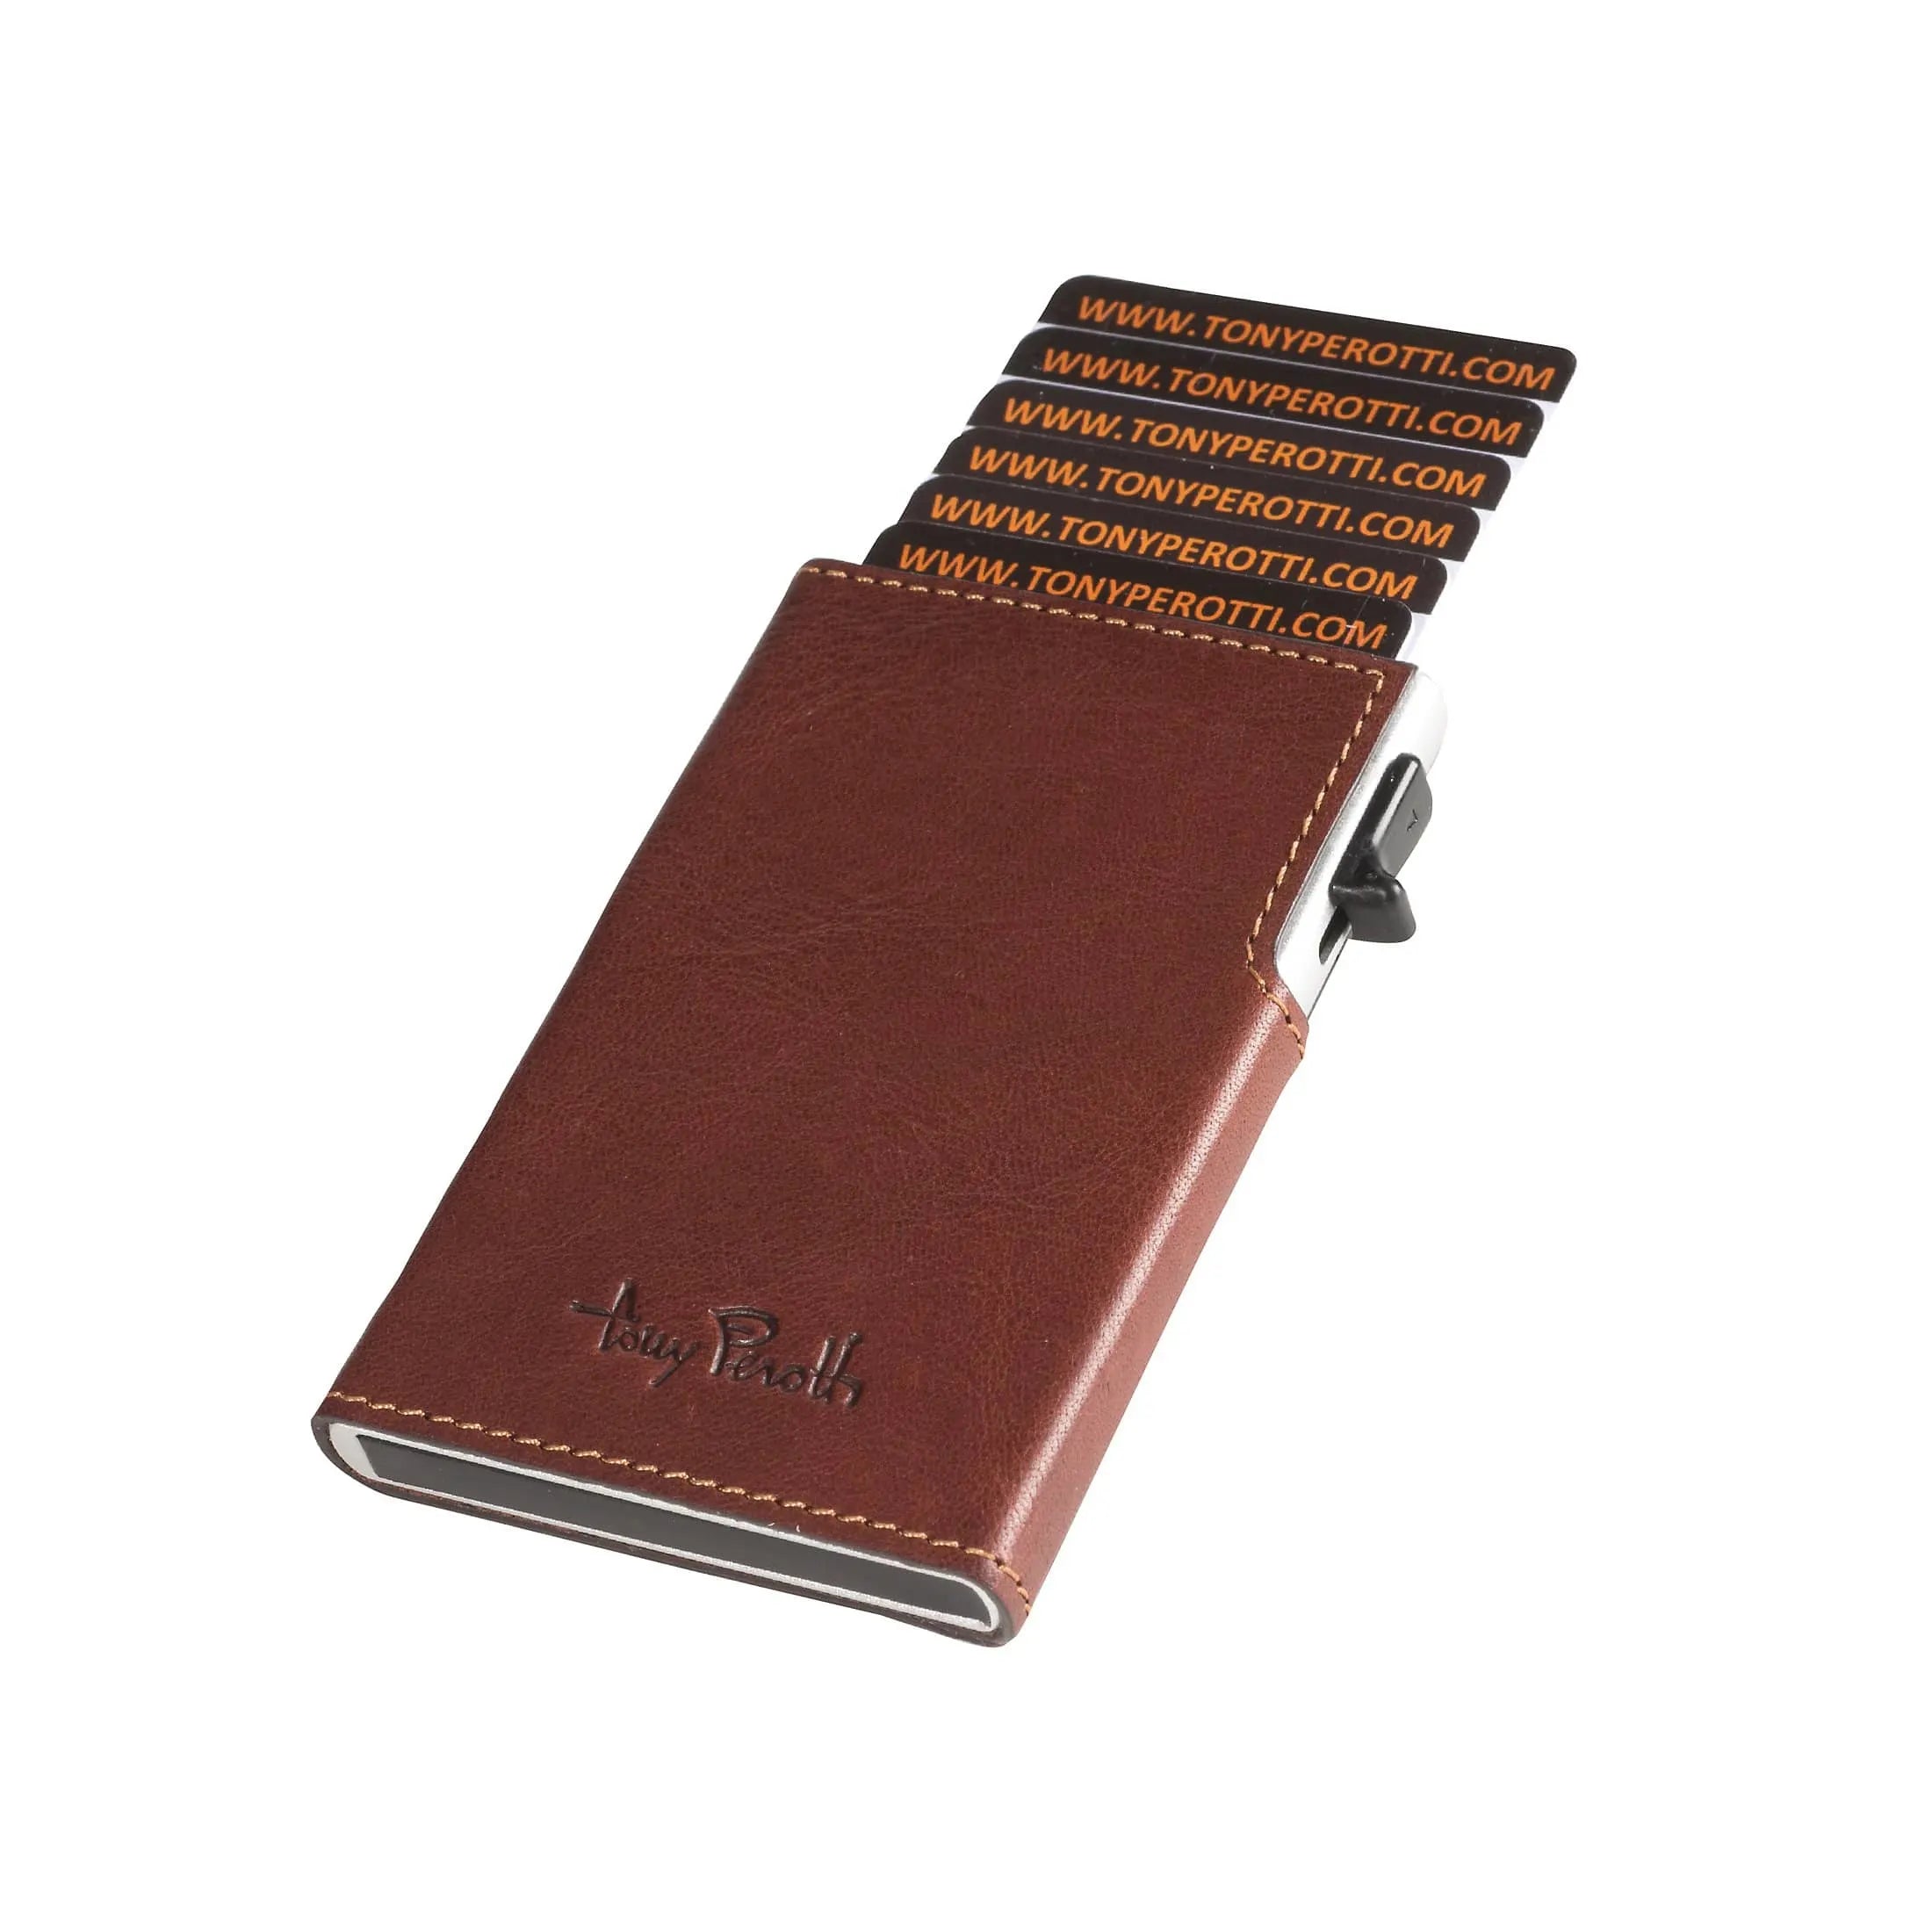 Tony Perotti Furbo credit card holder leather slim RFID 9 cm - dark brown